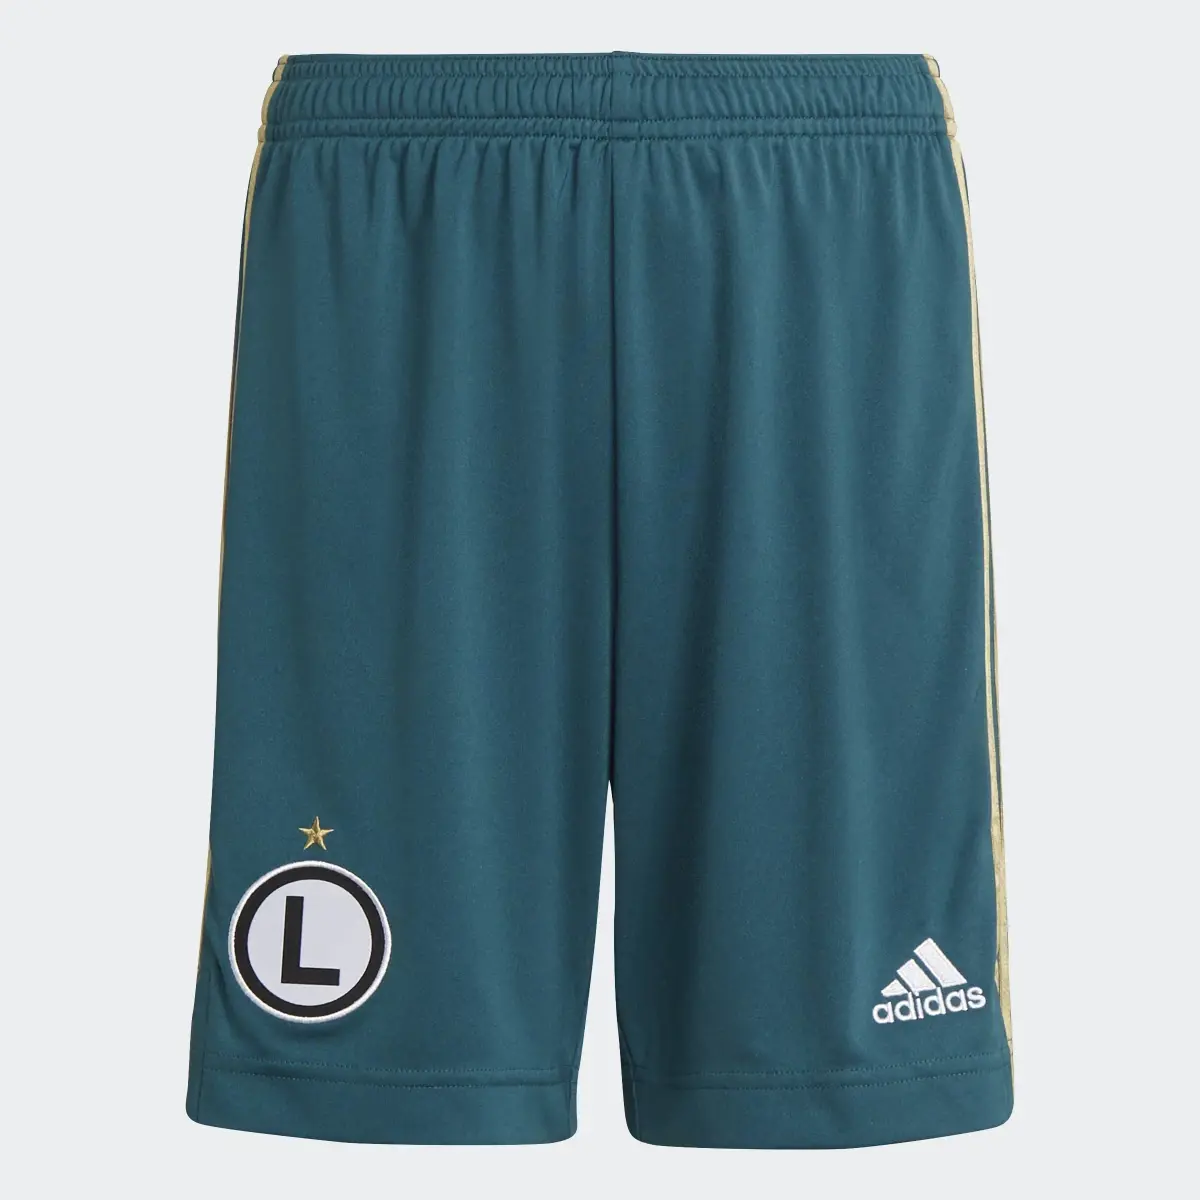 Adidas Legia Warsaw 21/22 Home Shorts. 1